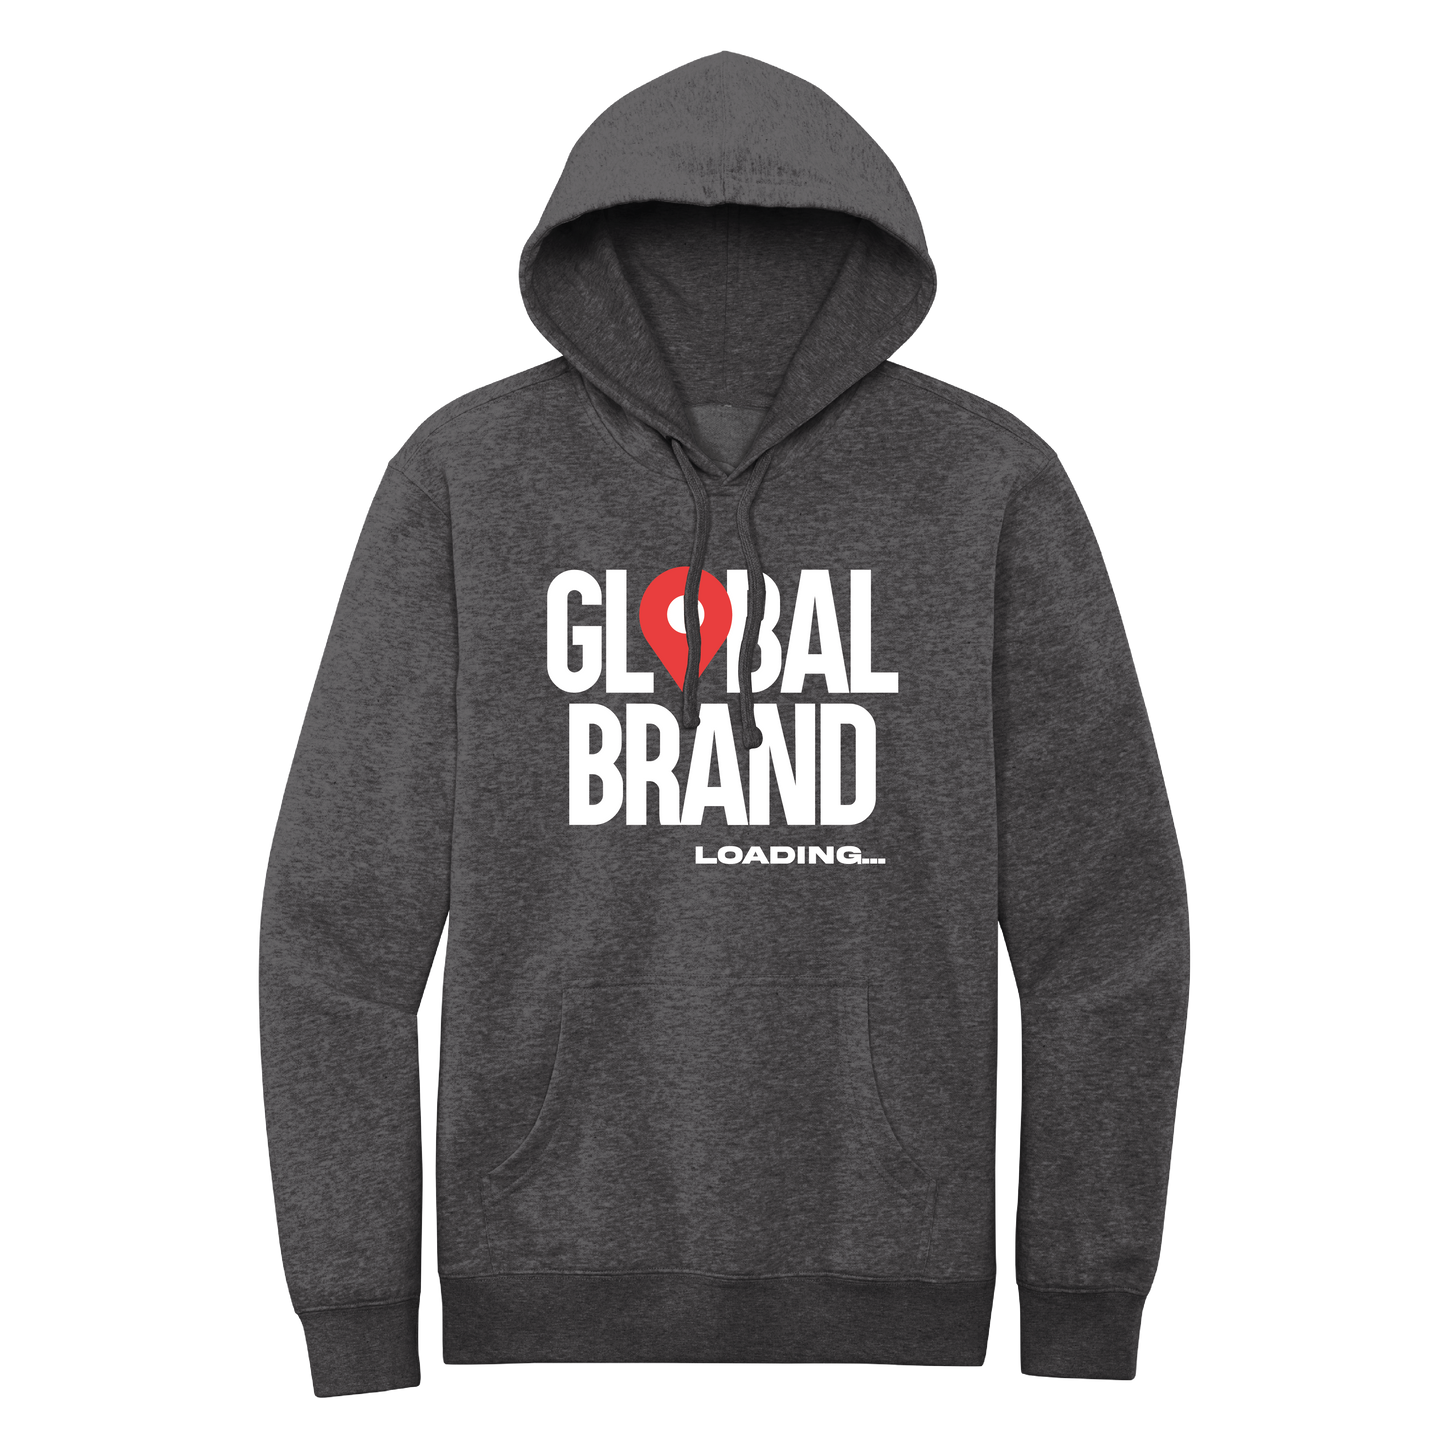 Global Brand Loading... Hoodie - Heather Charcoal